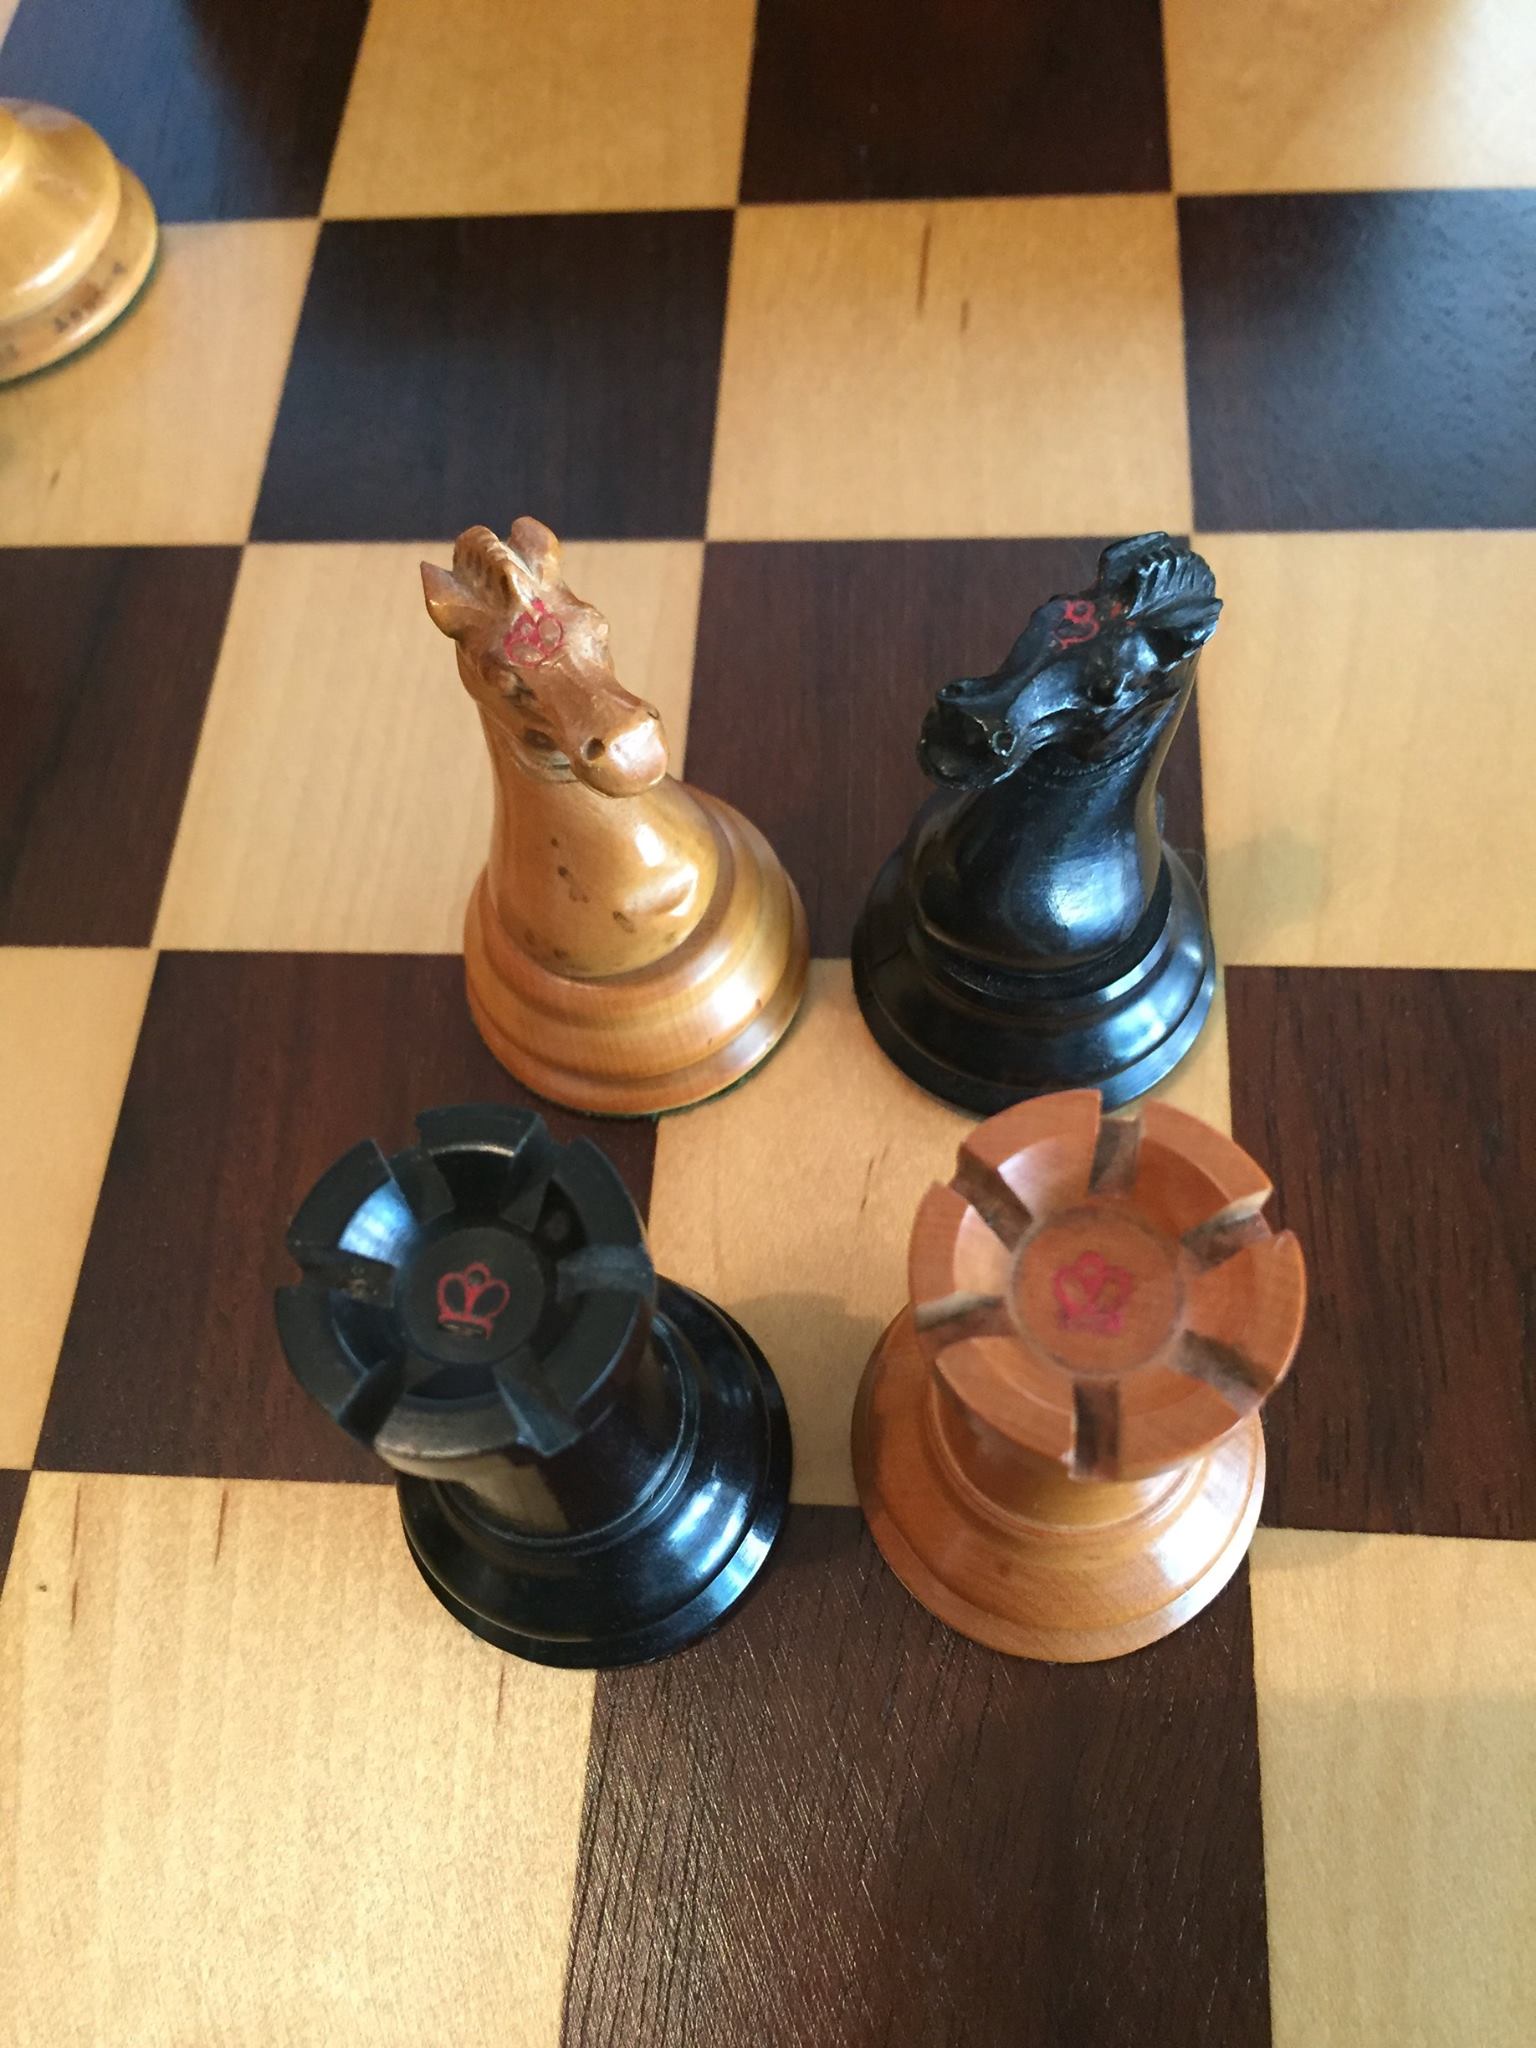 Historical chess set designs